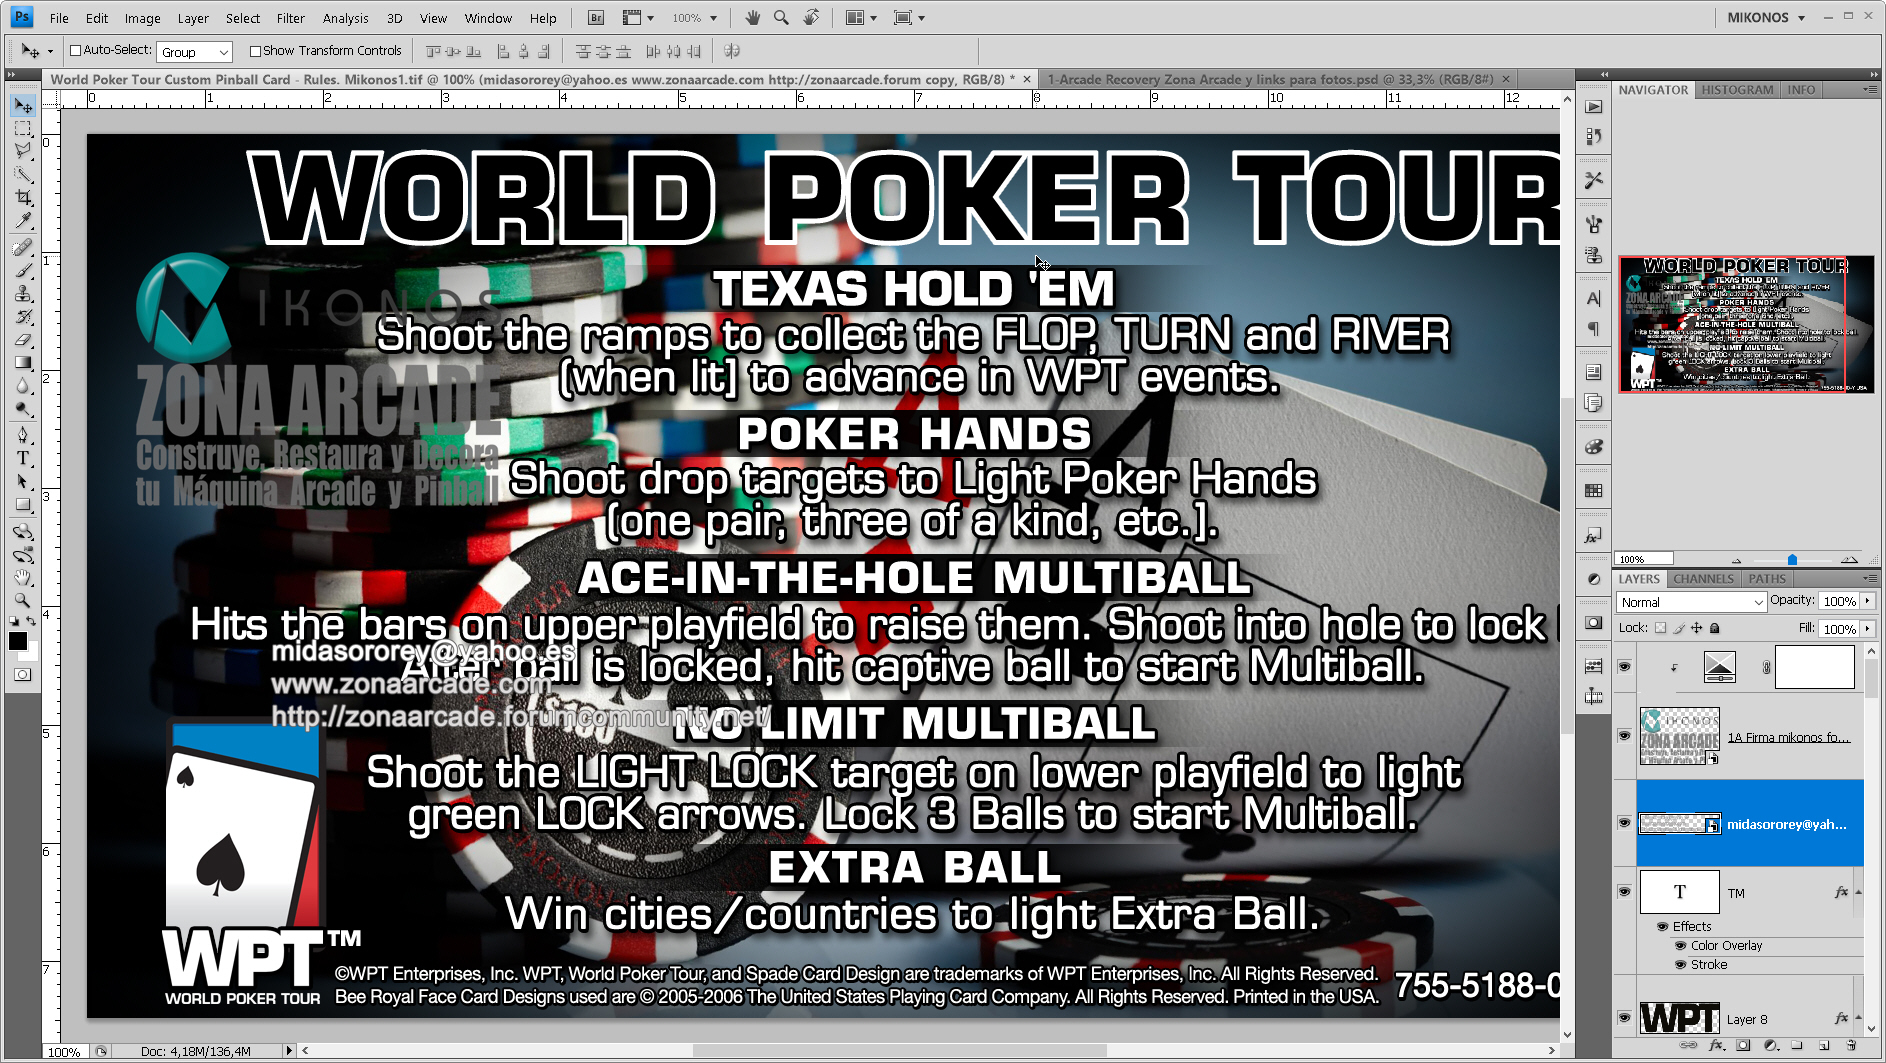 World Poker Tour Pinball Card Customized - Rules. Mikonos2